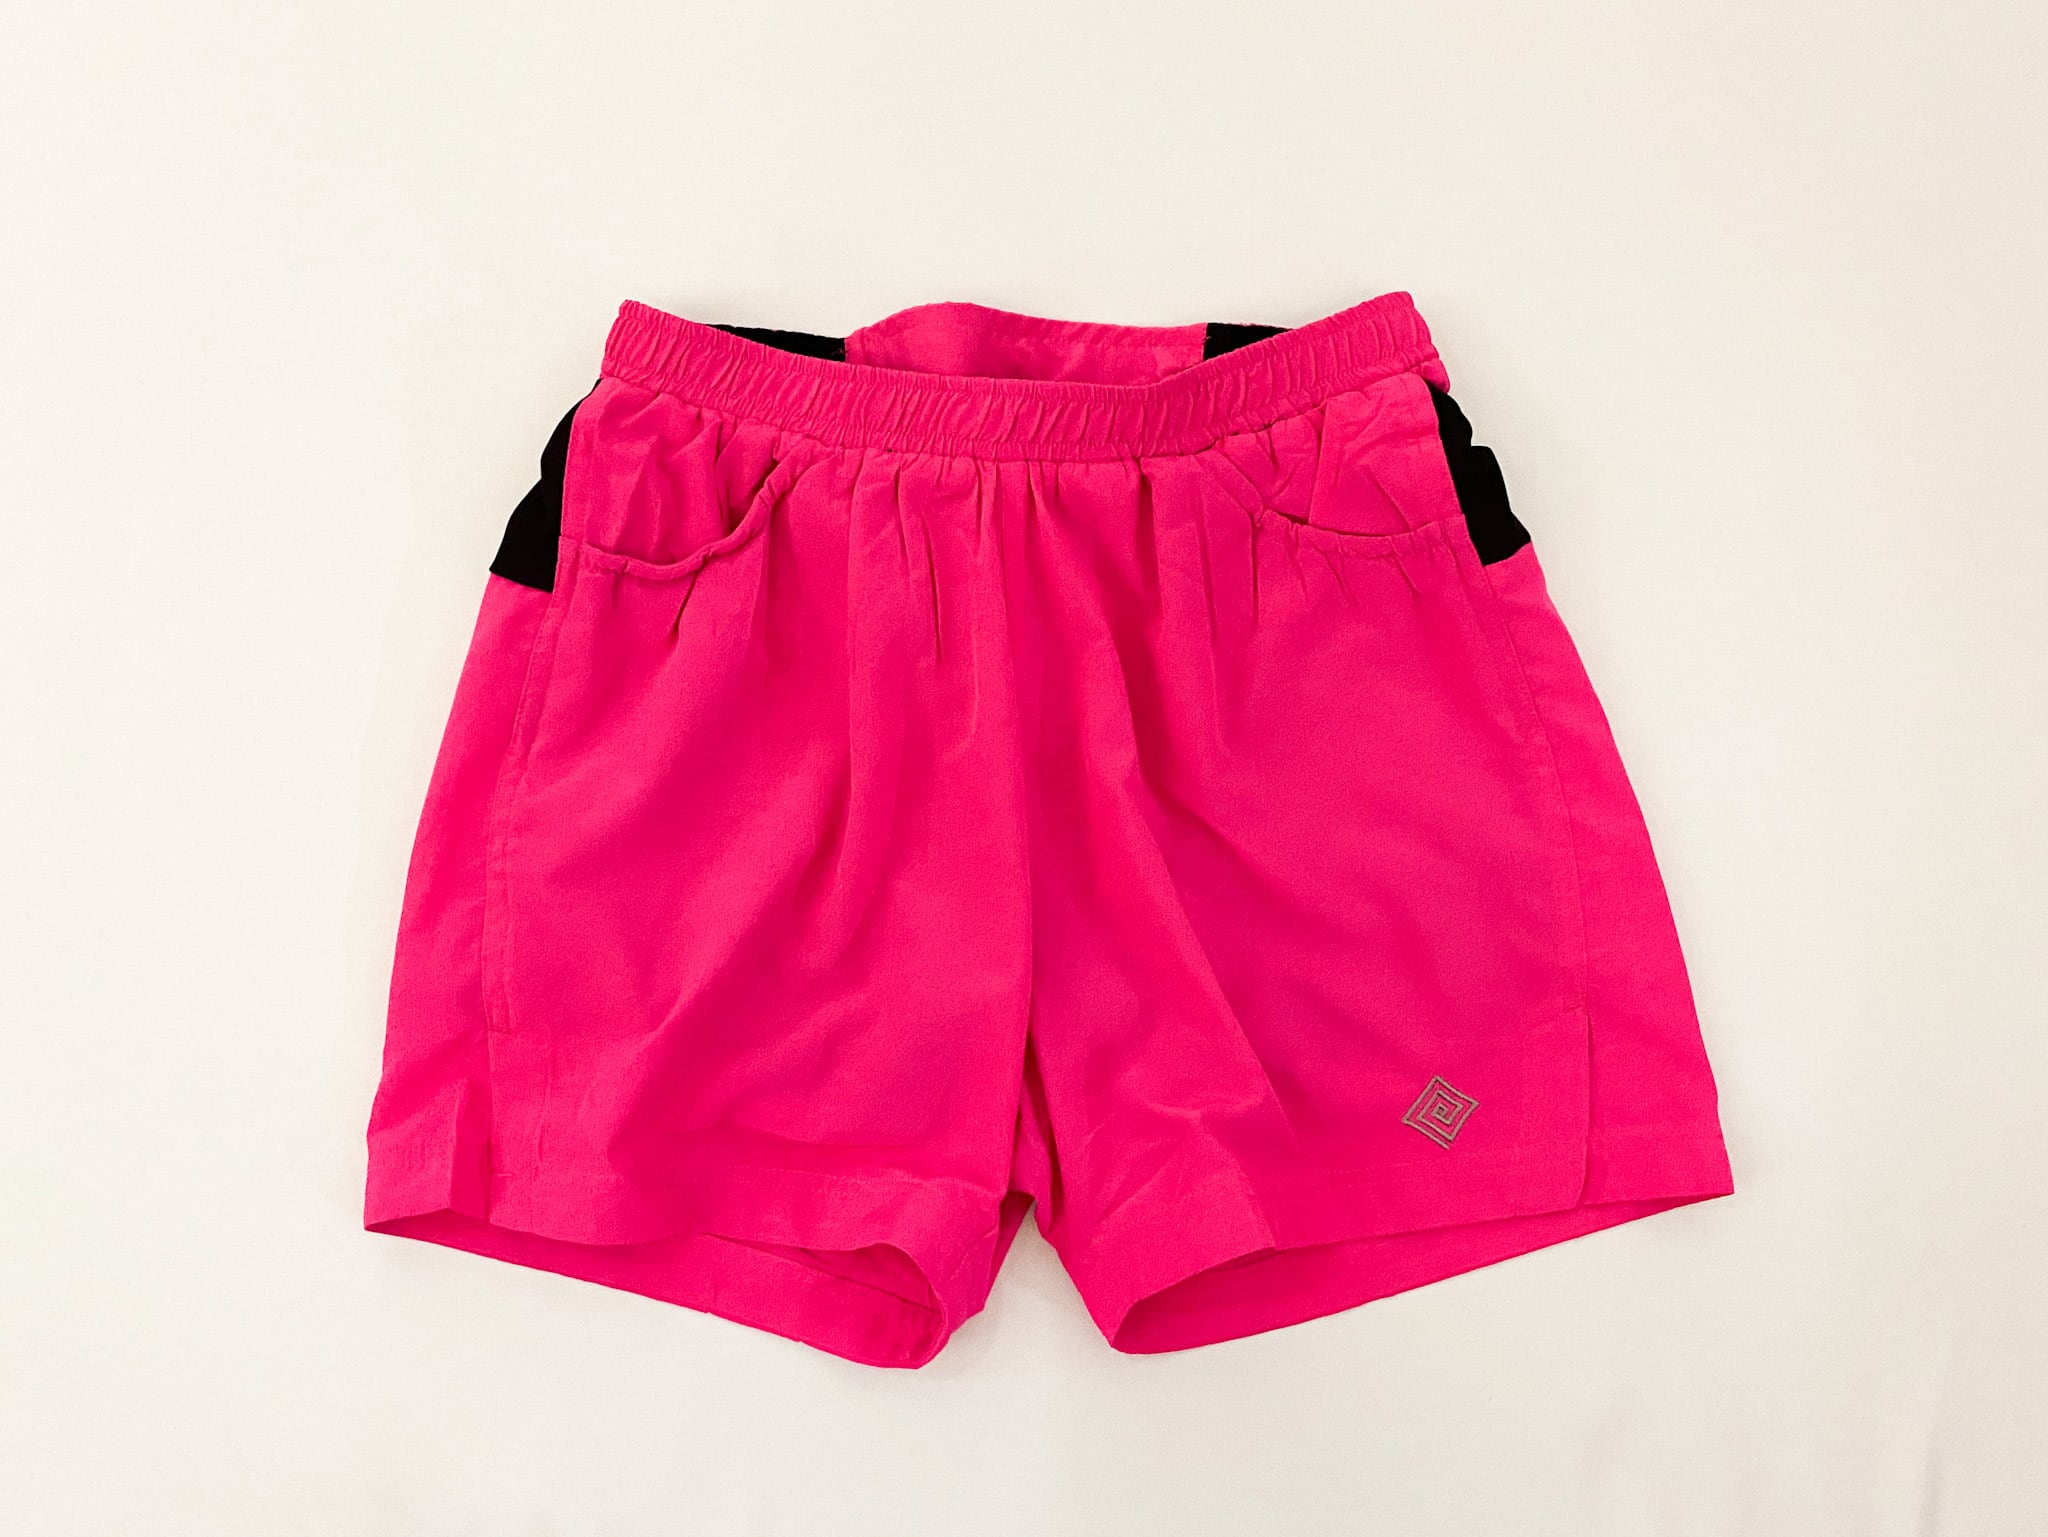 ELDORESO(エルドレッソ)Neo Bikila Shorts(Pink) メンズ・レディース ショートパンツ